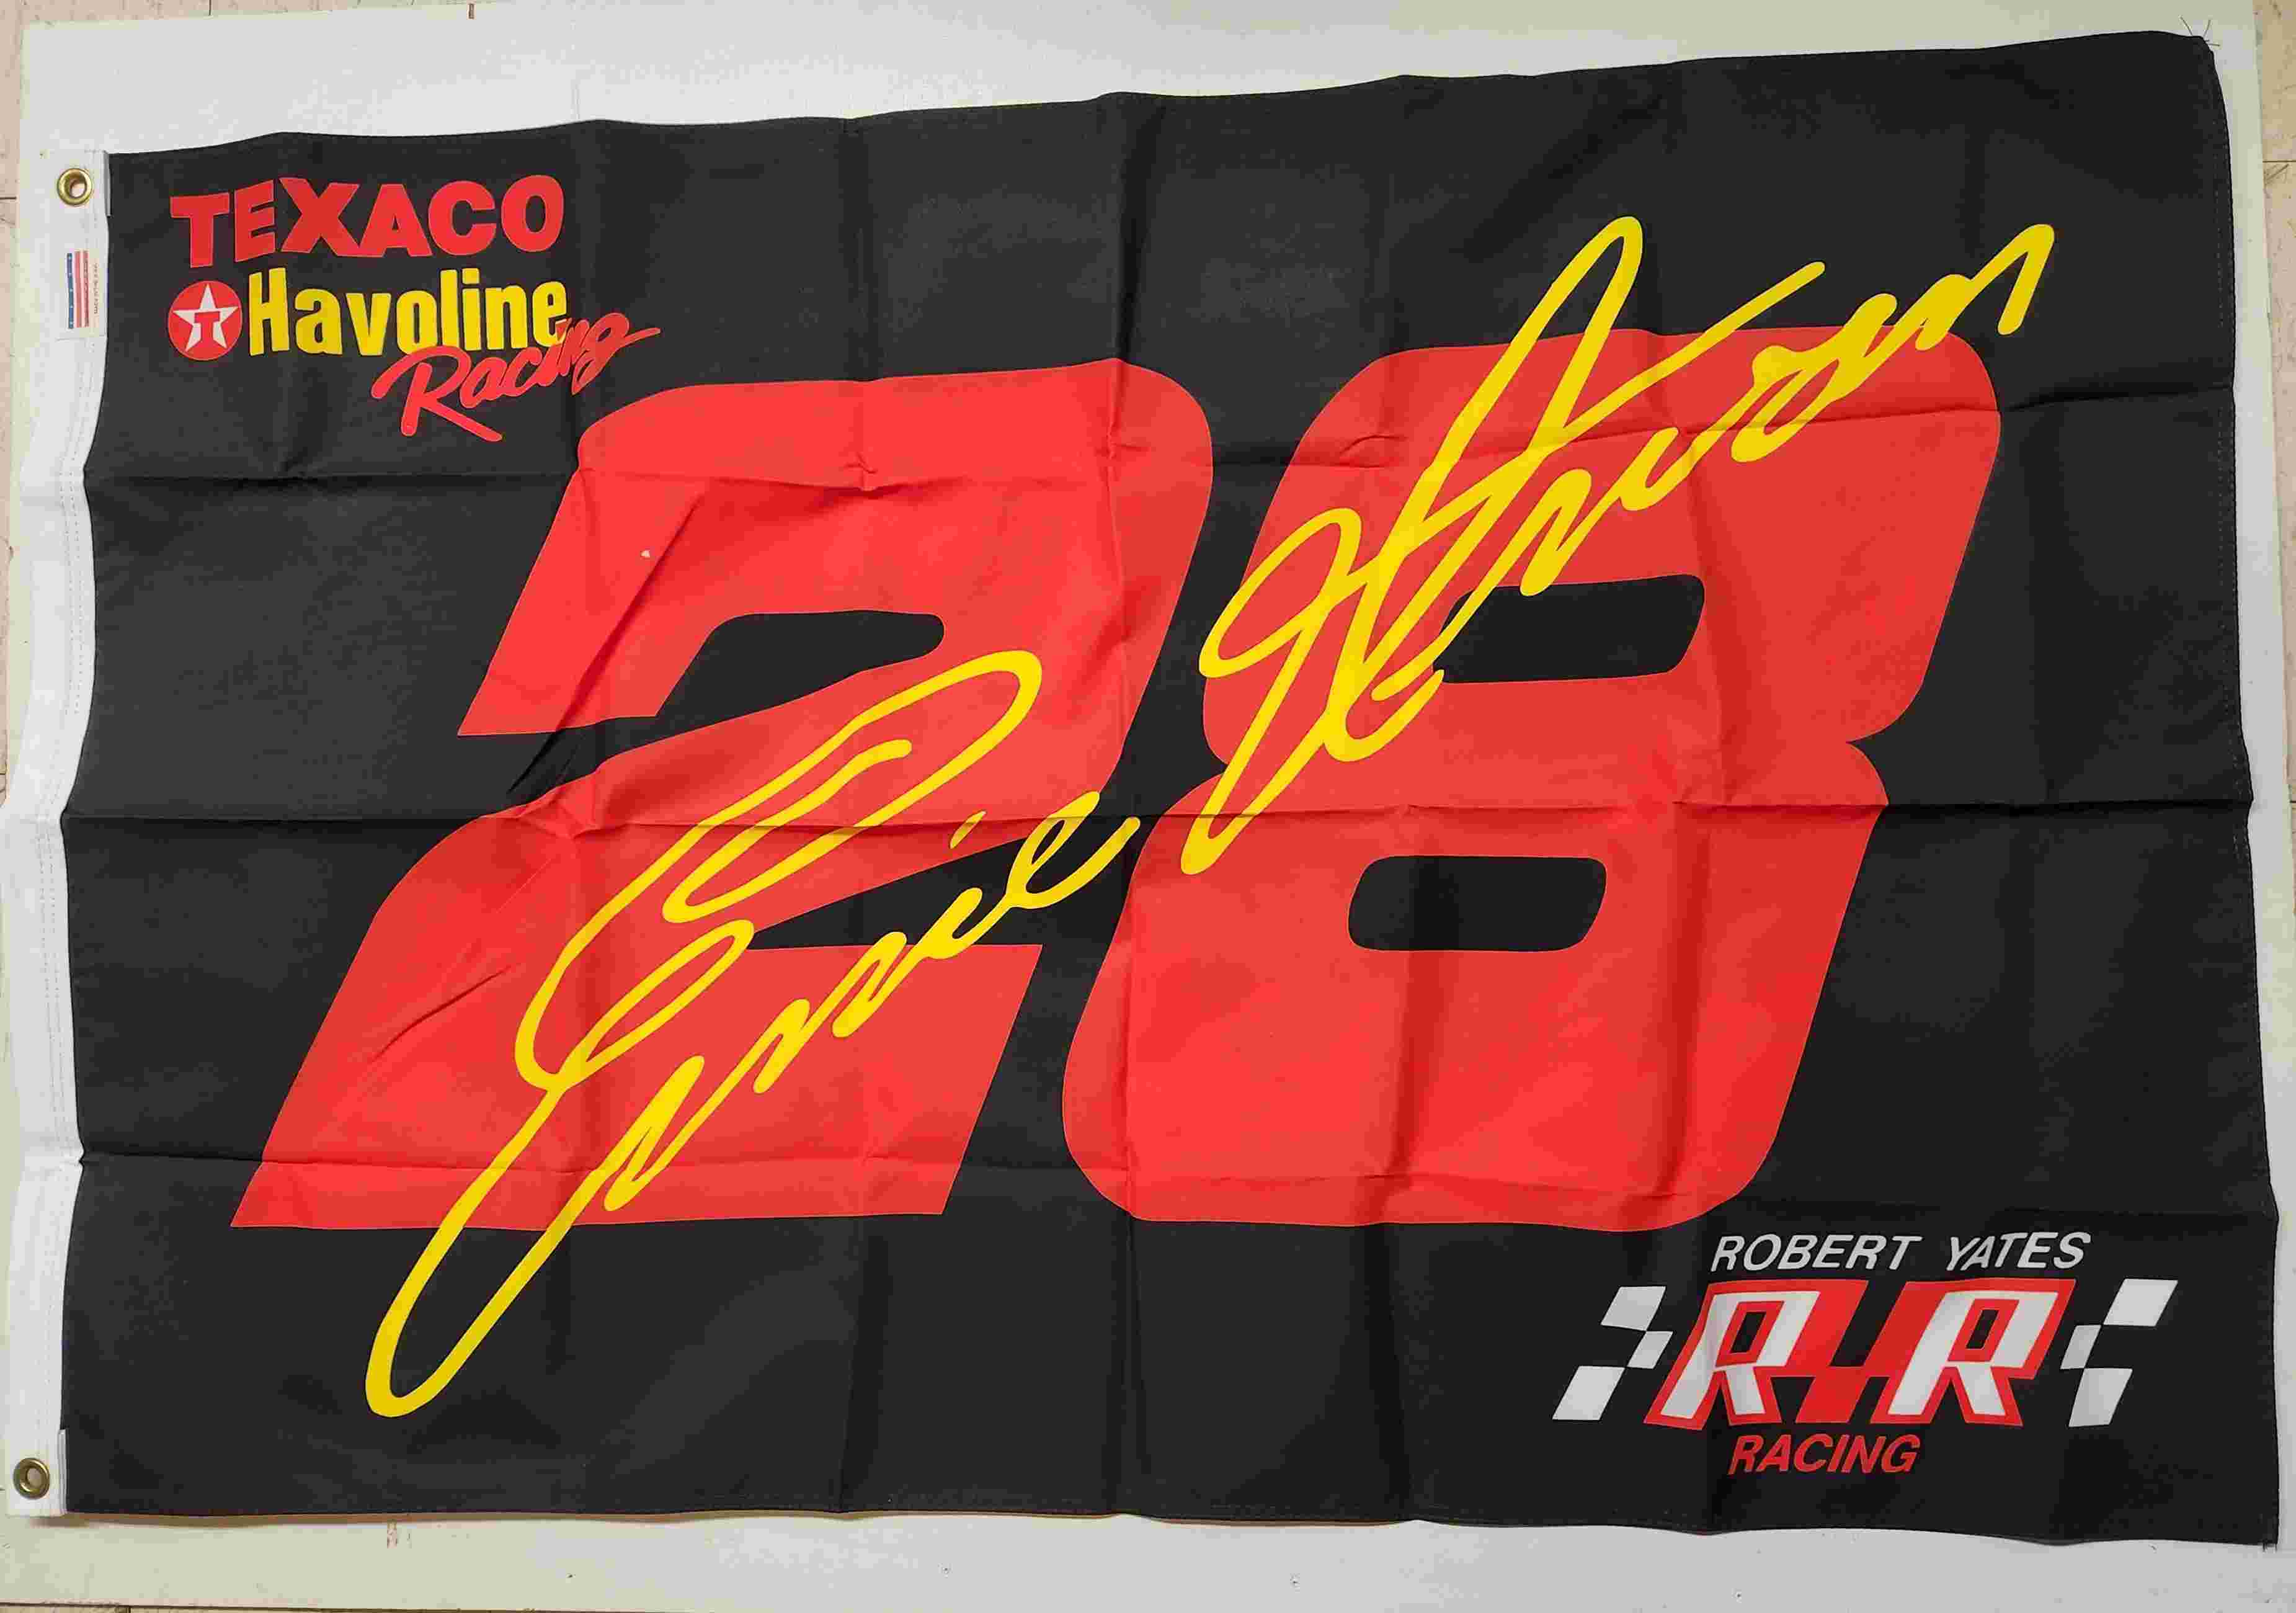 1997 Ernie Irvan Texaco Havoline Racing fan flag